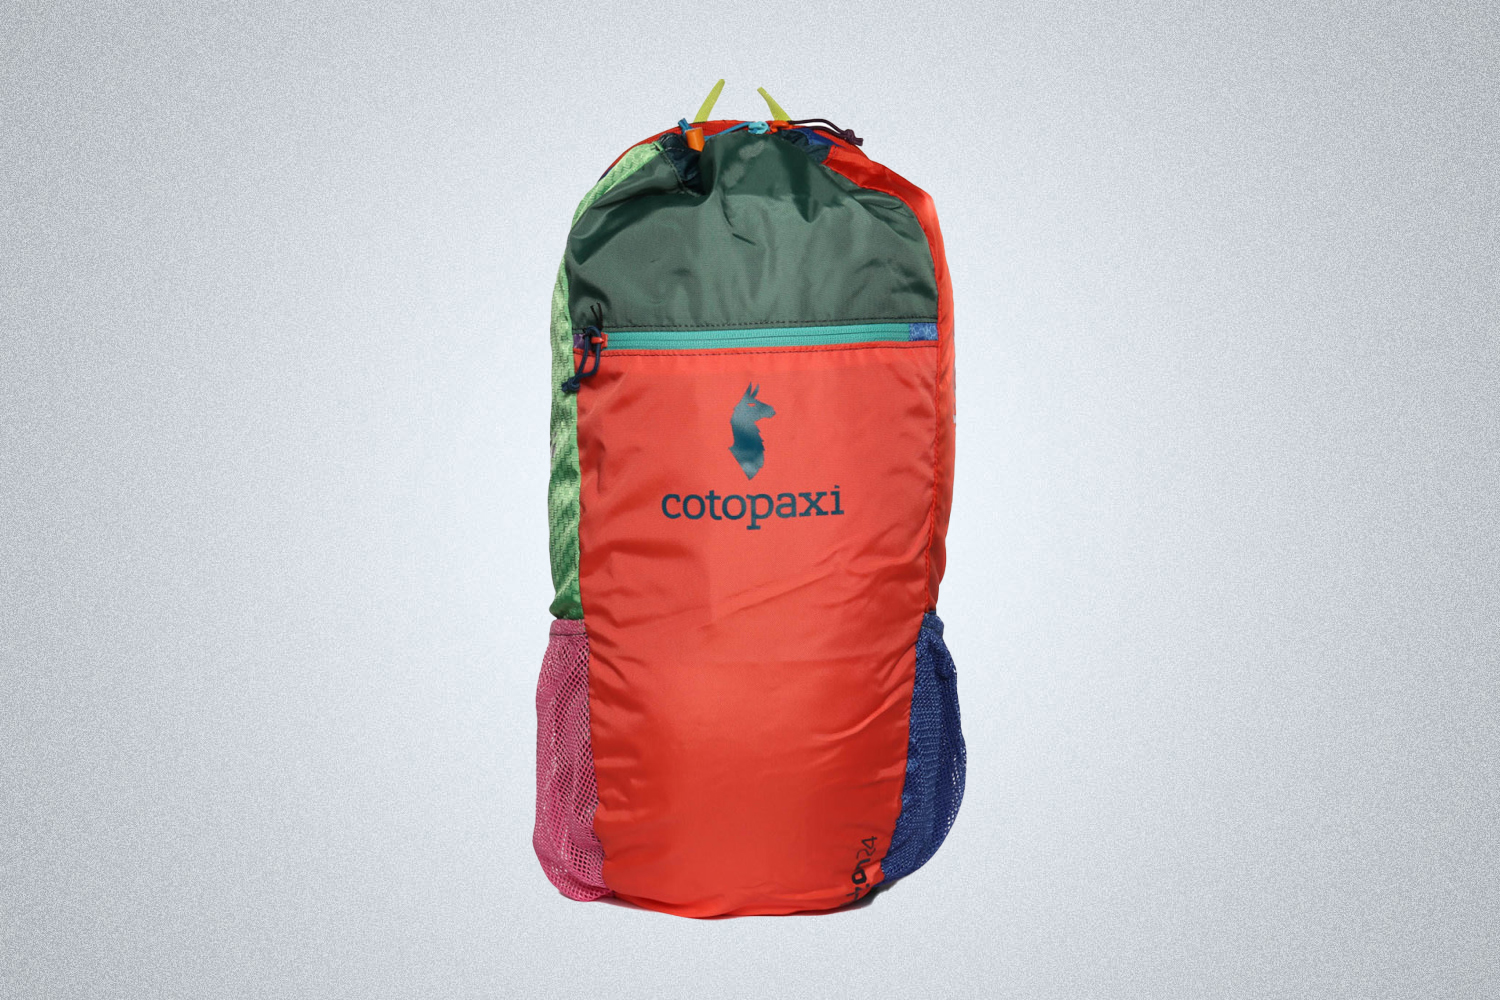 Cotopaxi Luzon 24L Backpack